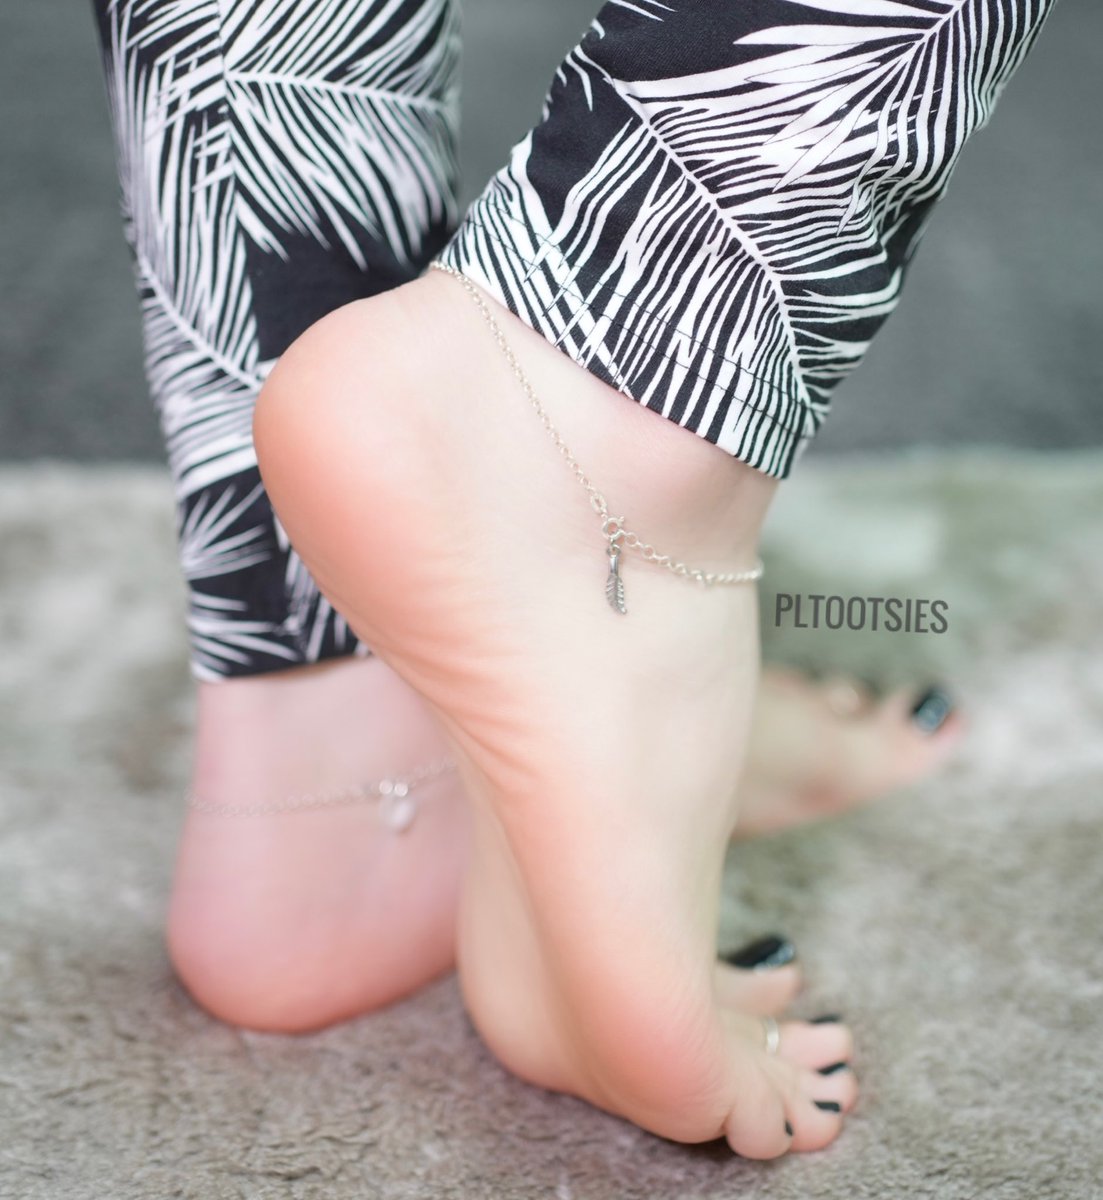 I see you fetishizing my feet, aren’t you!? ✨👑♠️ #feet #footfetish #footfetishnation #pedicure #footworship #sexyfeet #softfeet #footgoddess #footmodel #Prettyfeet #prettytoes #toes #feetlovers #beautifulfeet #cutefeet #teamprettyfeet #Soles #wrinkledsoles